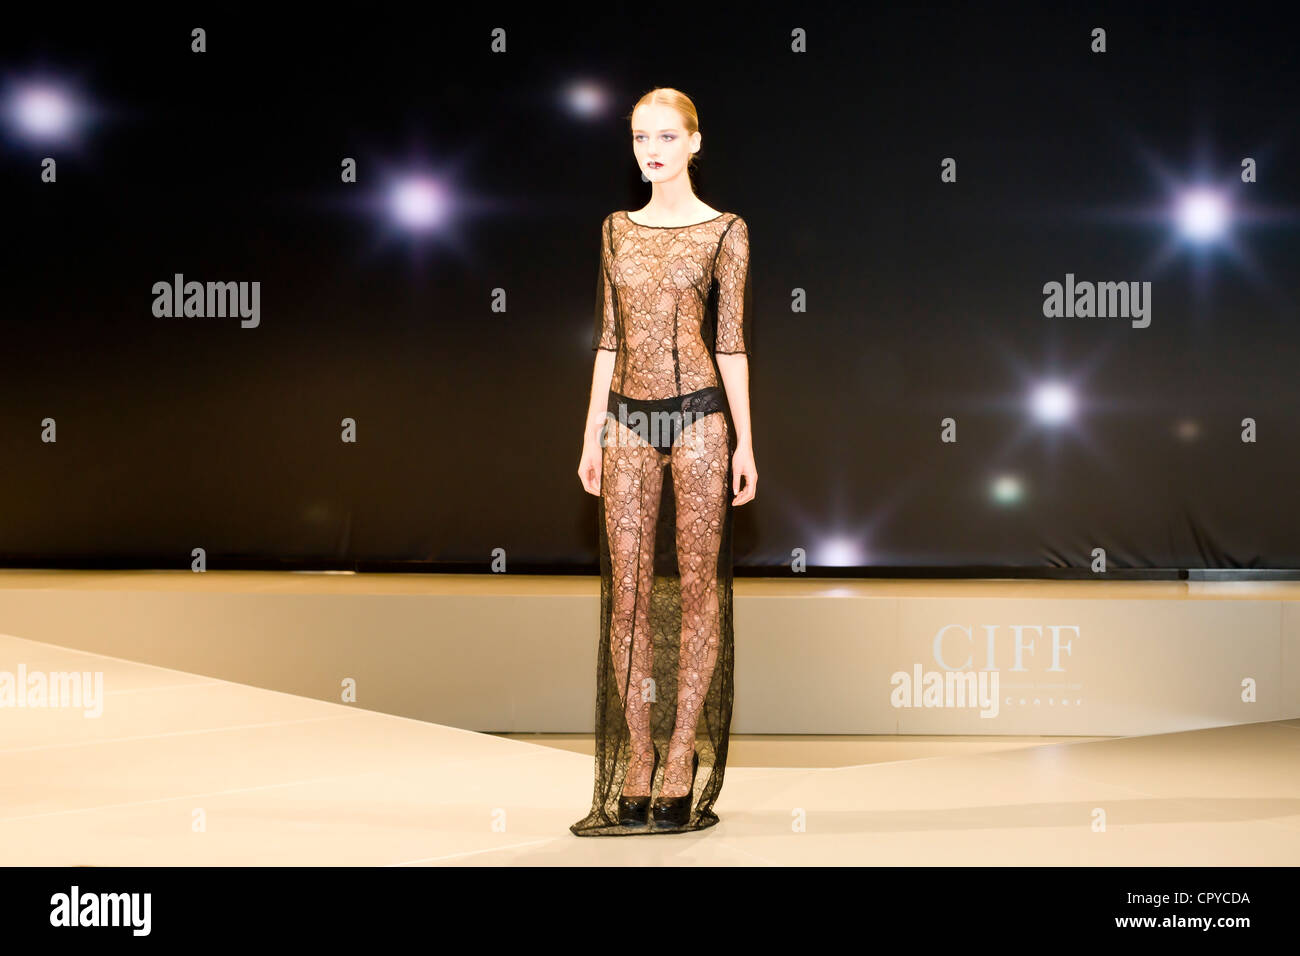 Transparent dress -Fotos und -Bildmaterial in hoher Auflösung – Alamy